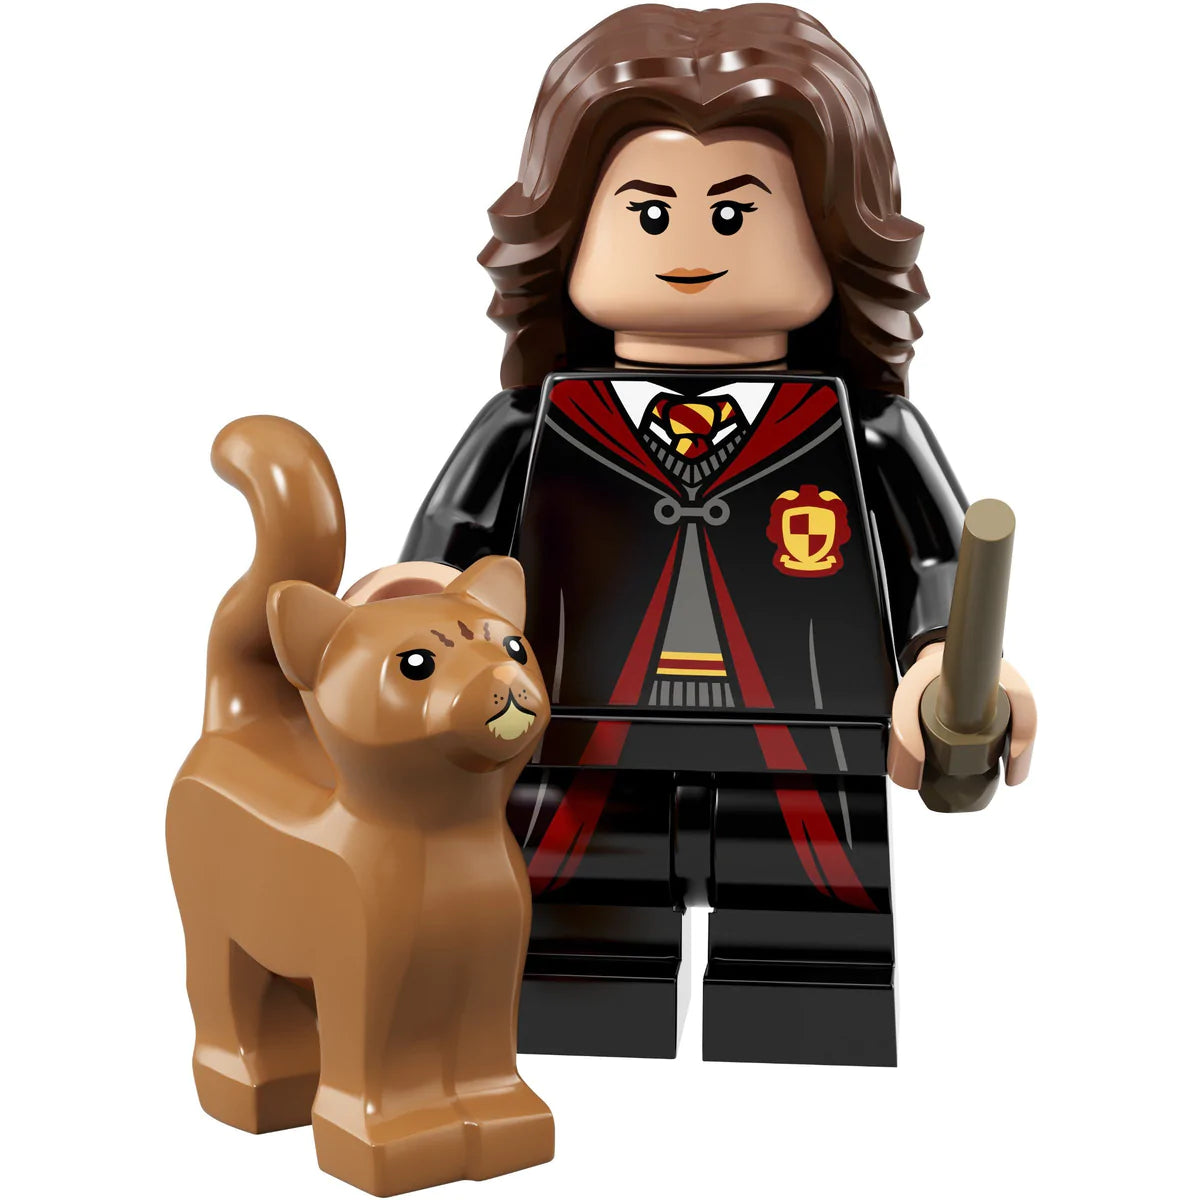 Hermione Granger in School Robes, Harry Potter, Series 1